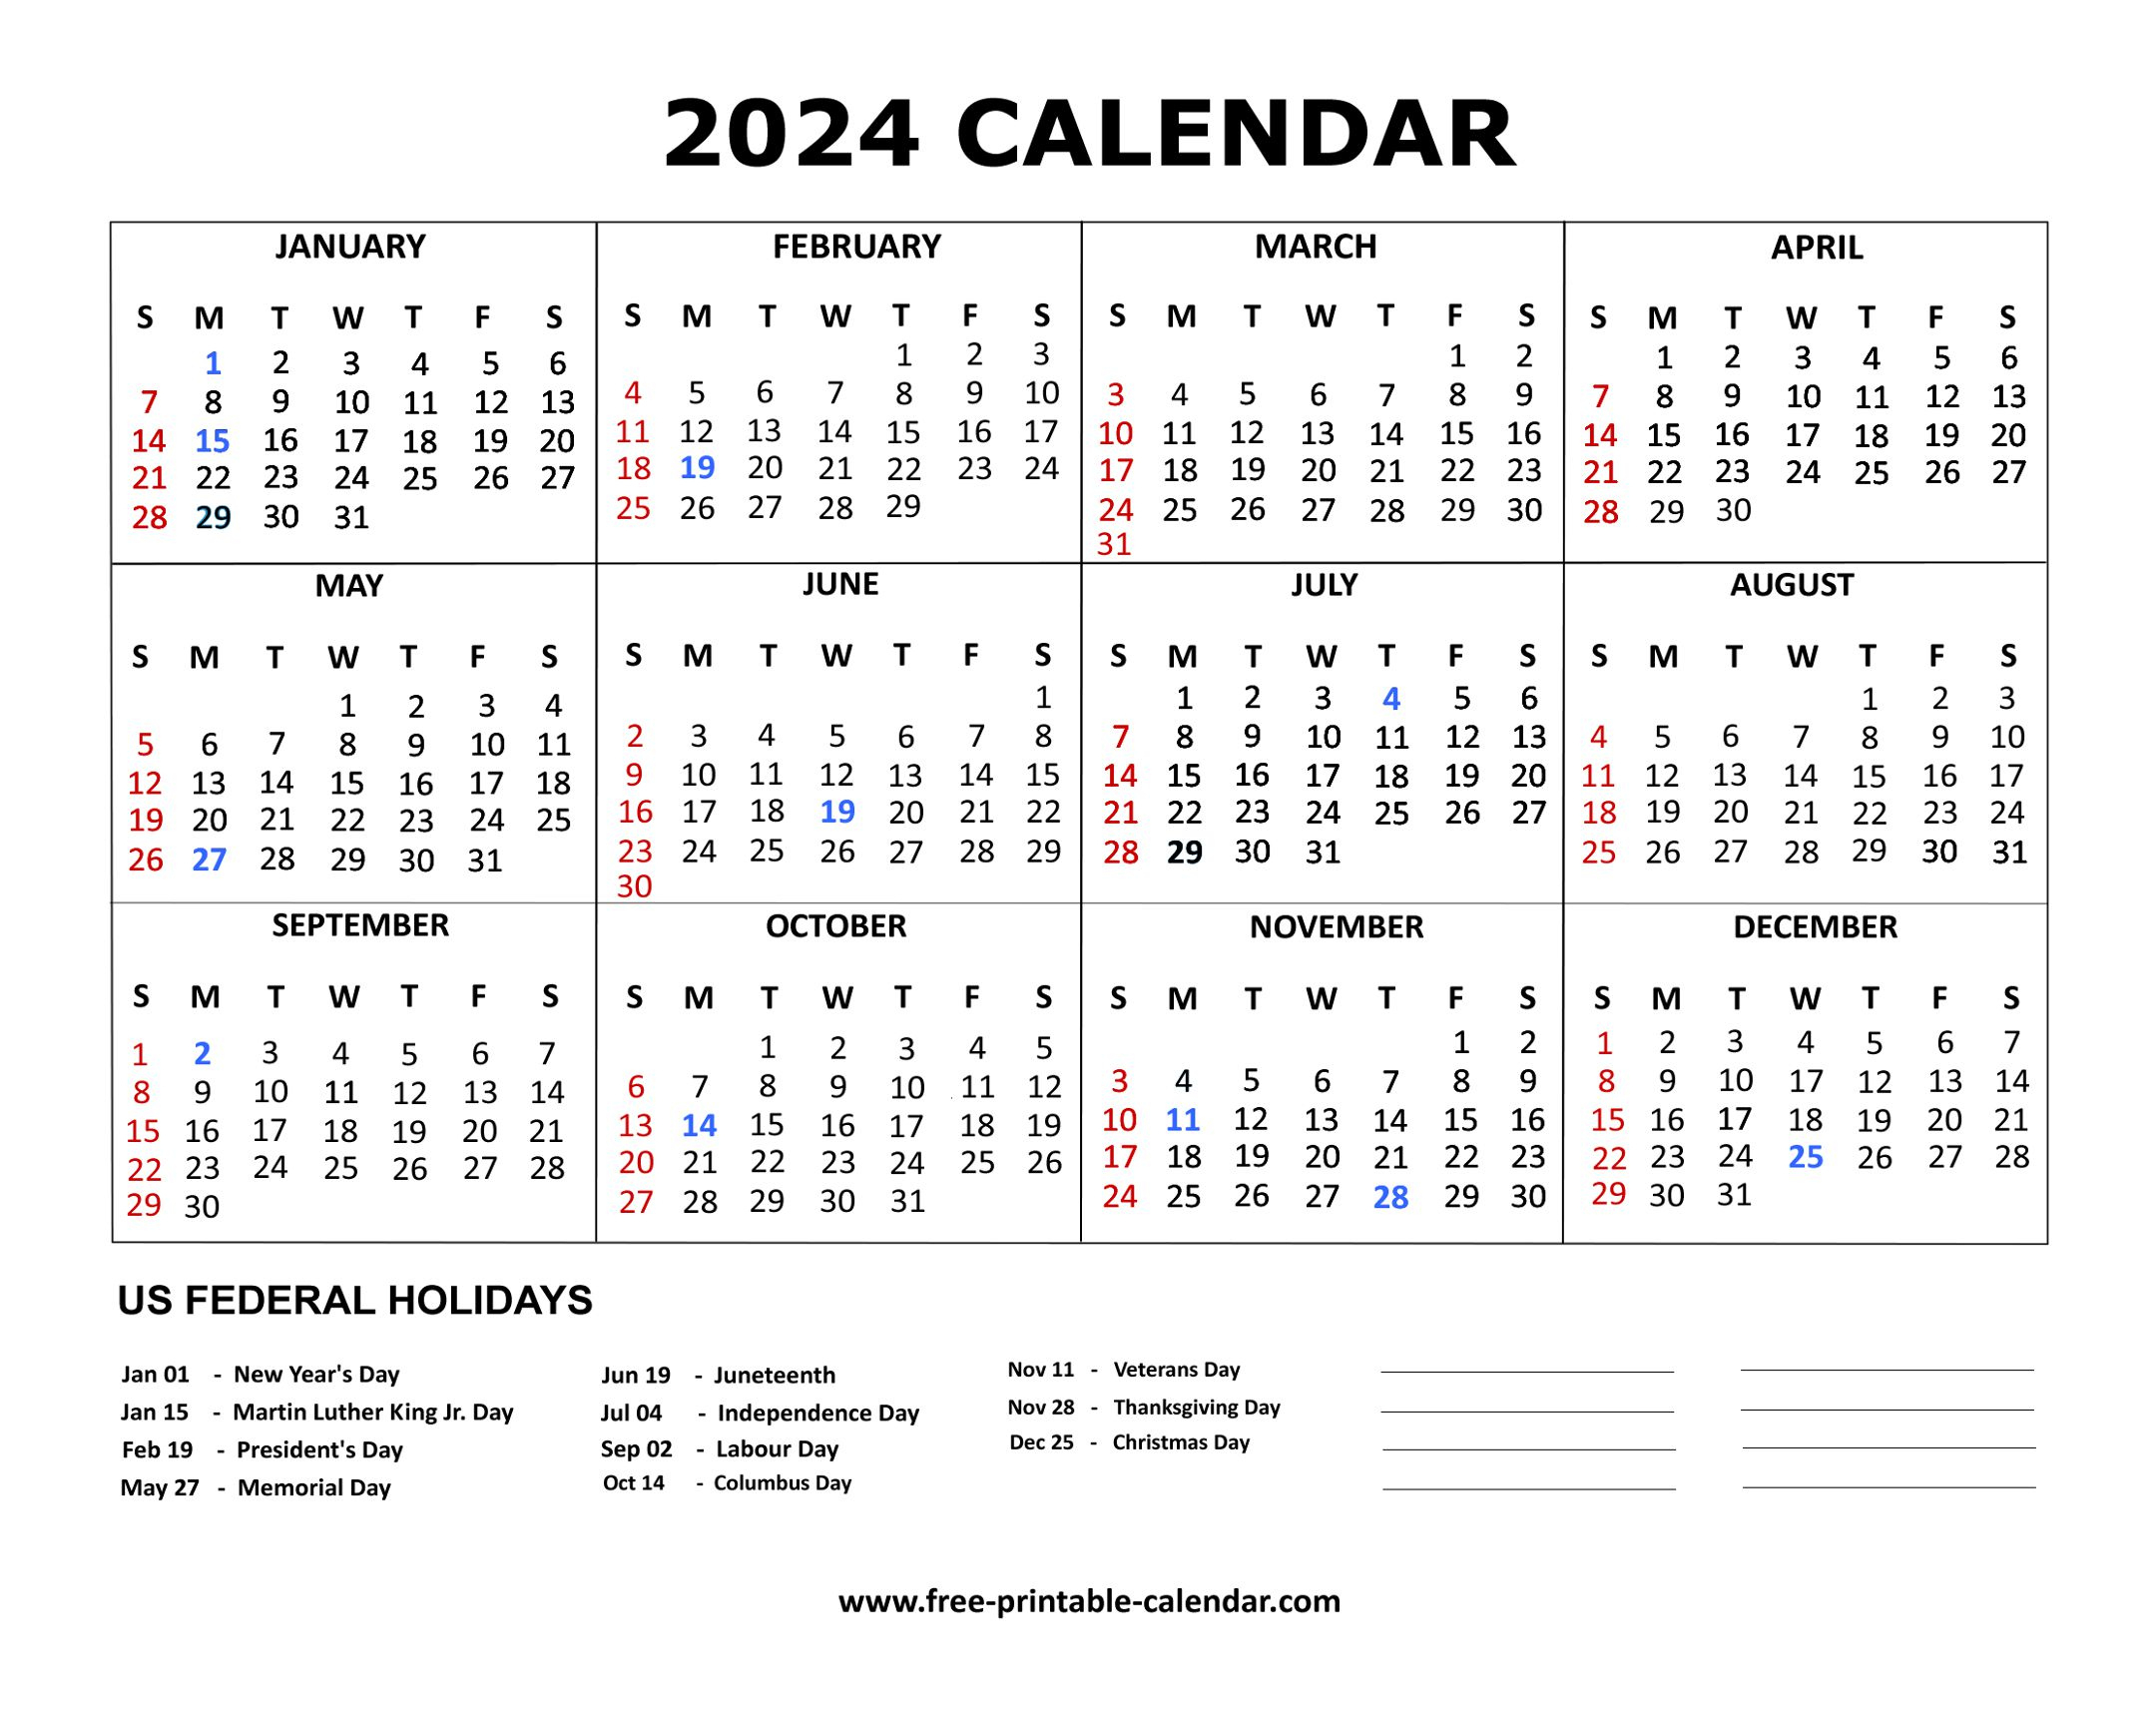 2024 Calendar | Printable Calendar 2024 With Holidays Free